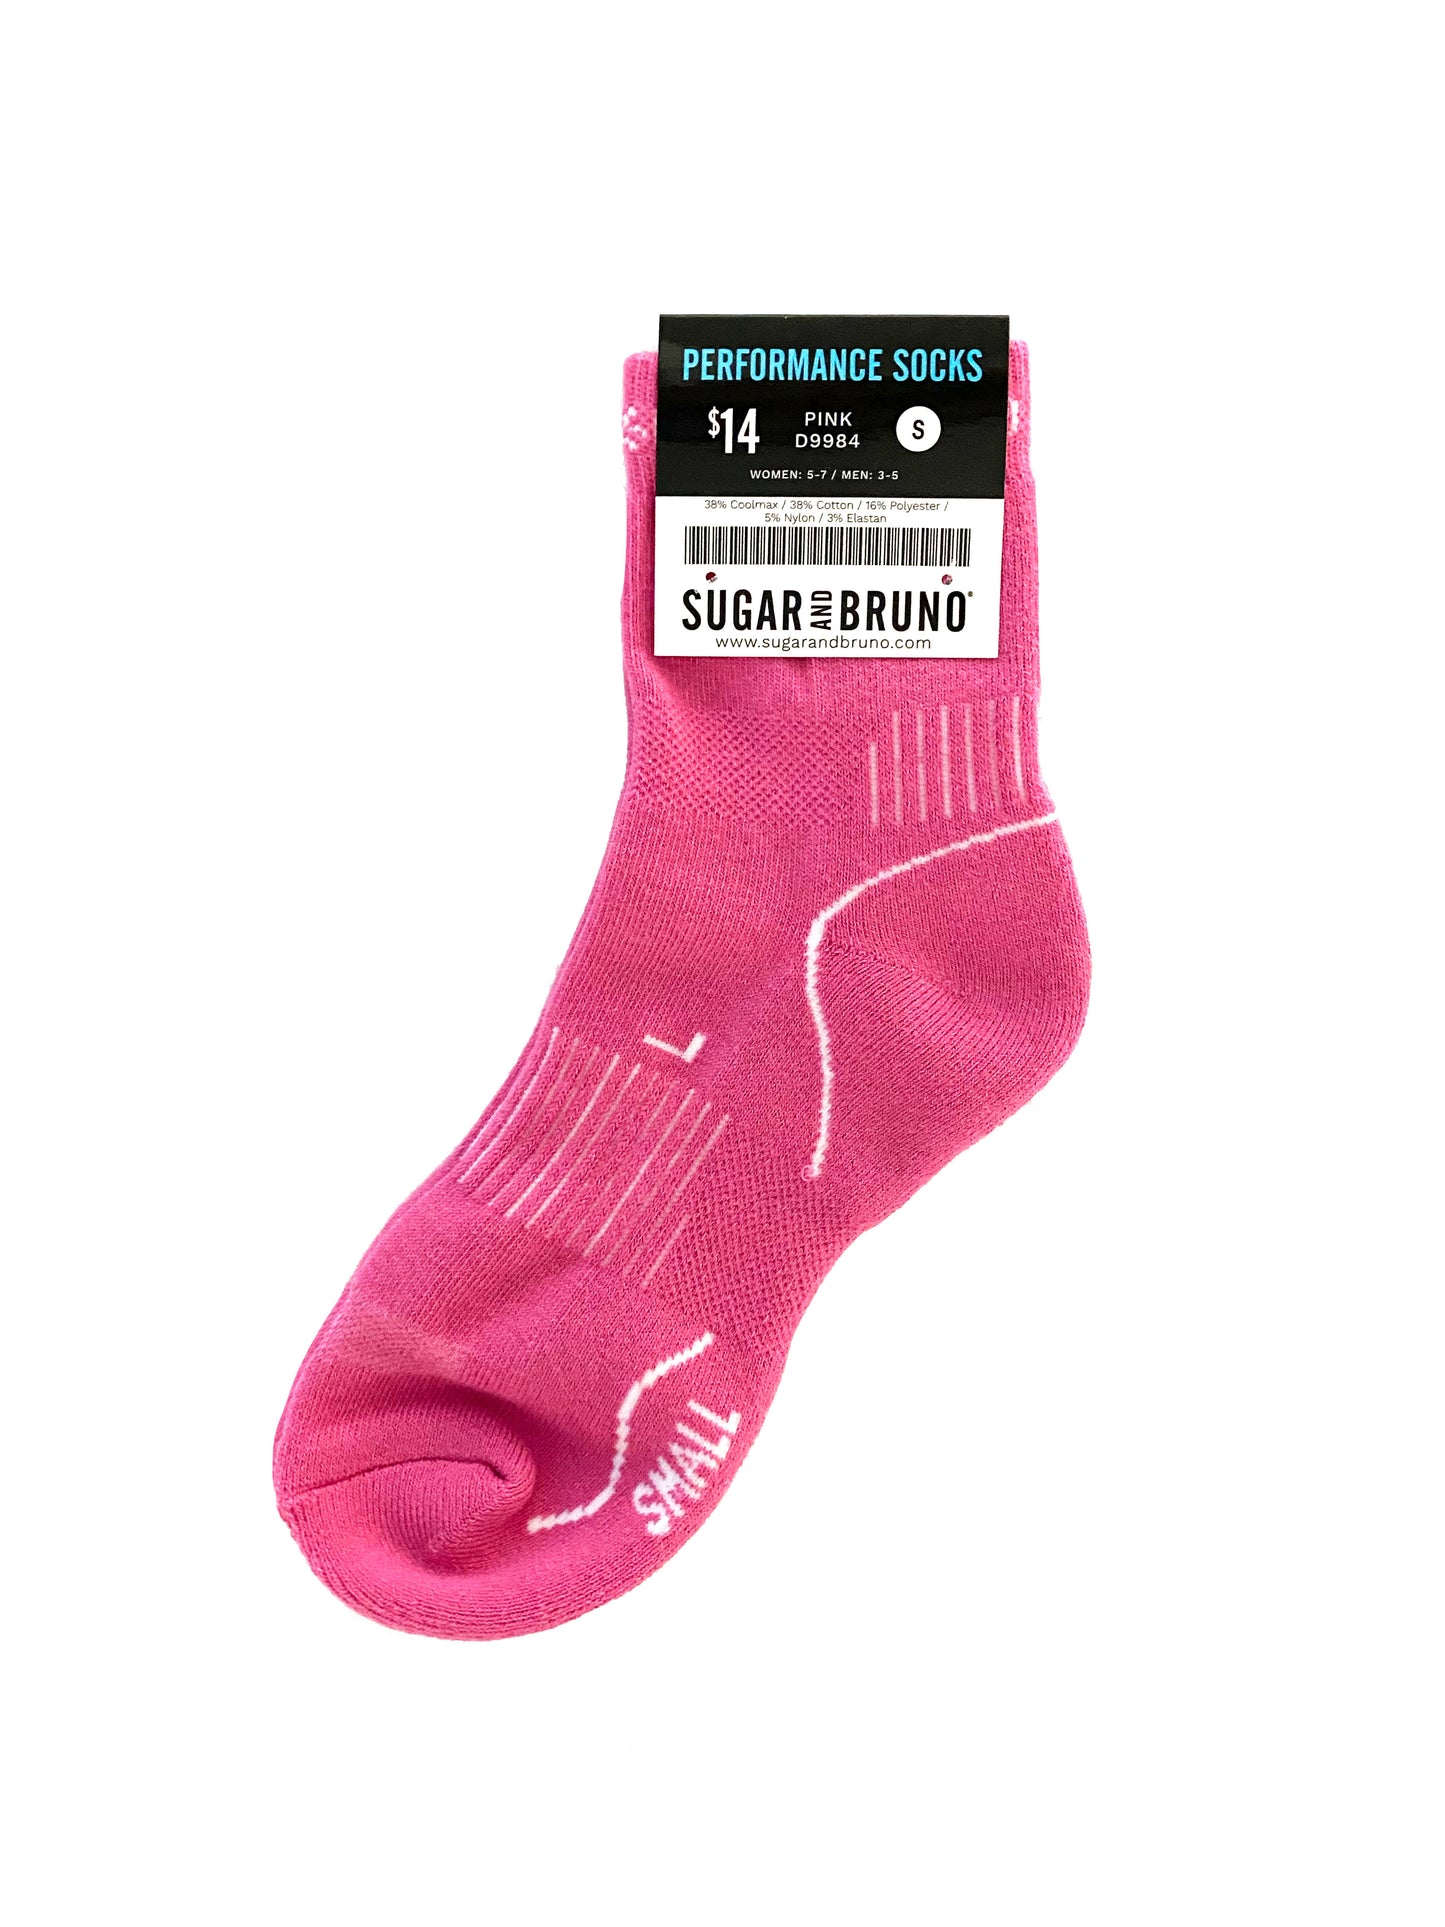 SB Performance Socks, Pink